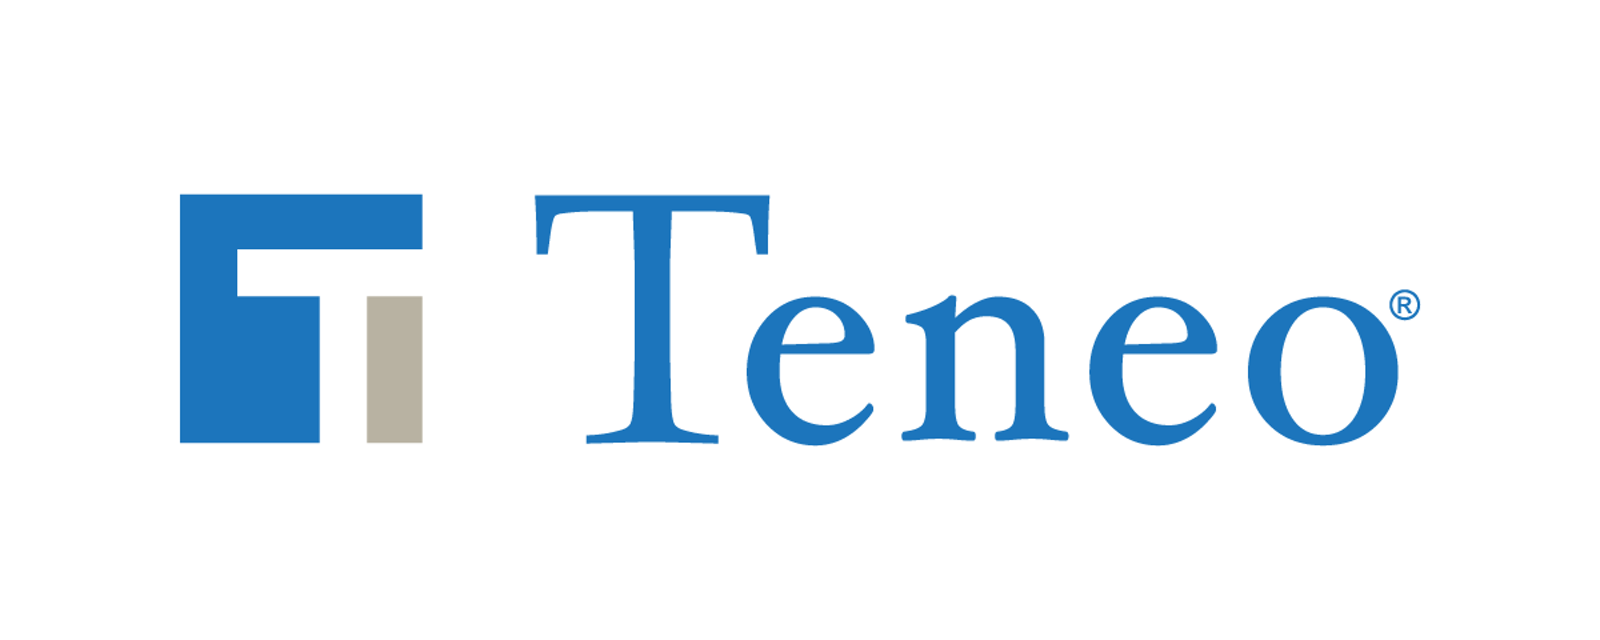 CEO Advisory Firm Teneo Acquires London-Based Ridgeway Partners